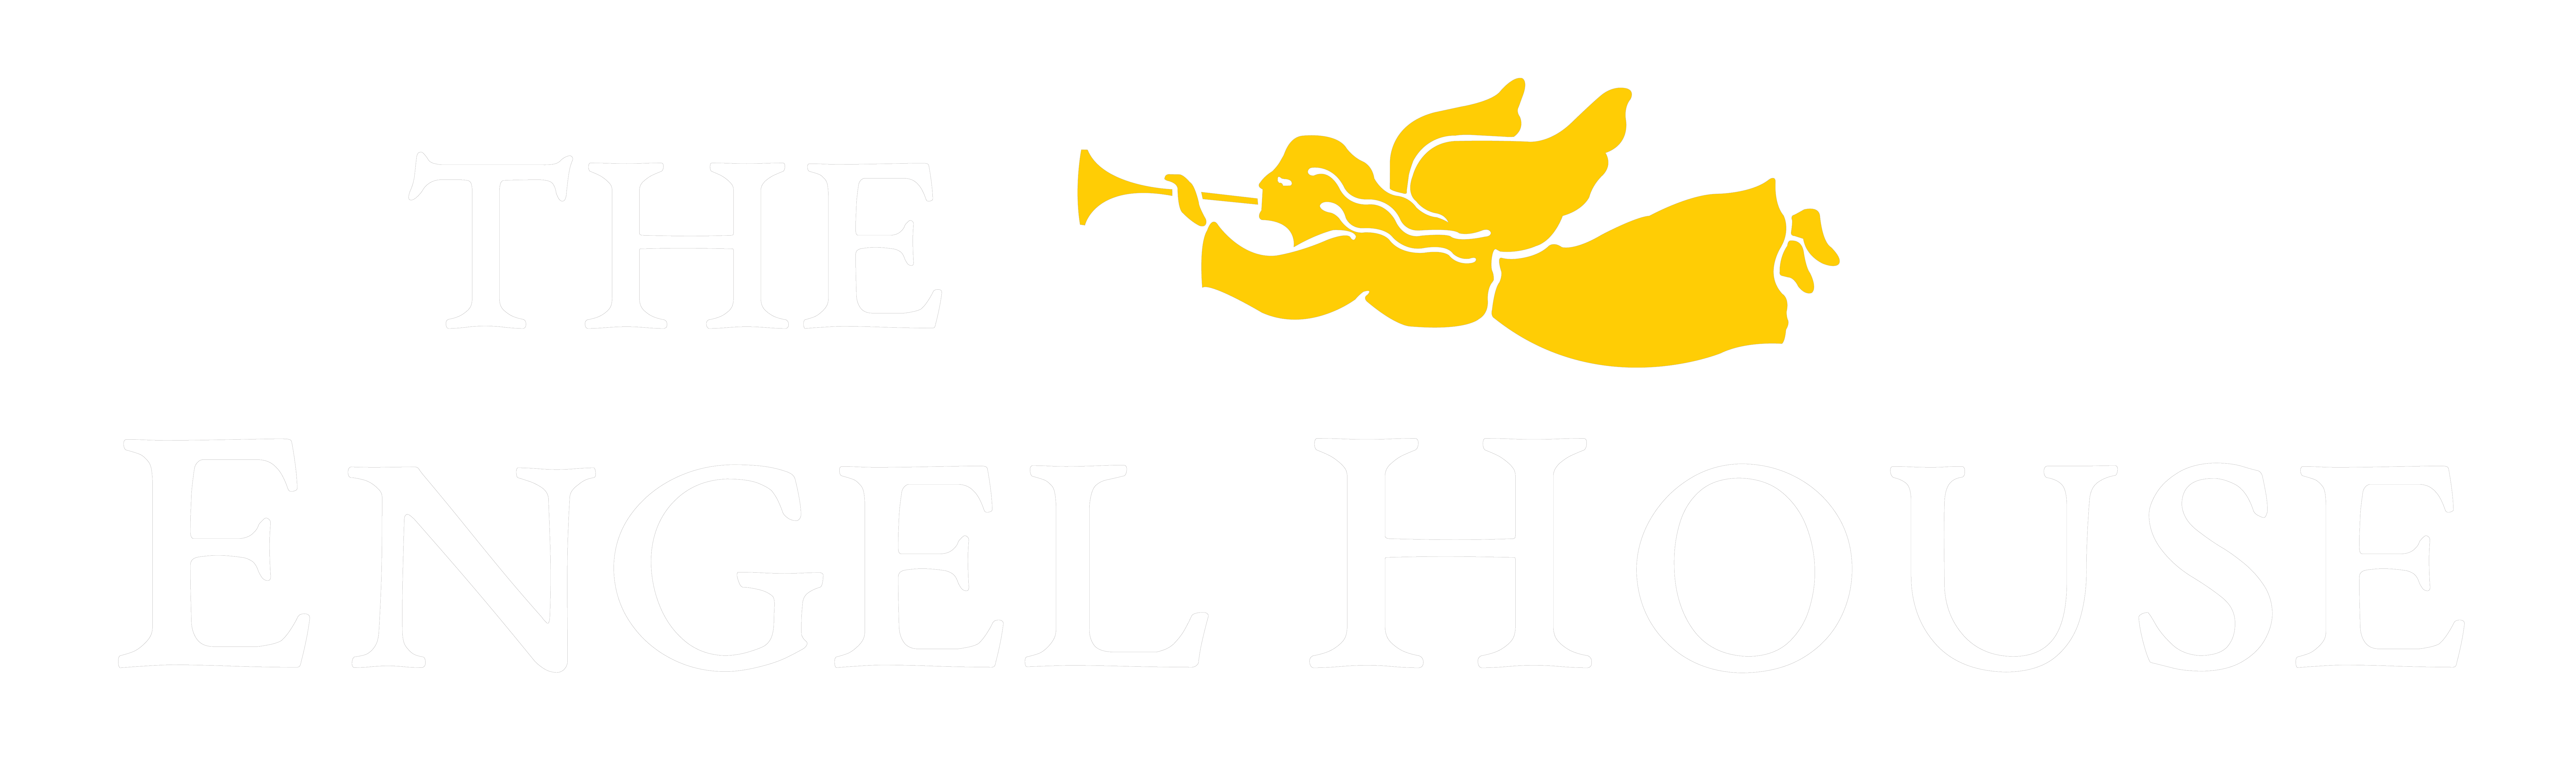 The Engel House logo